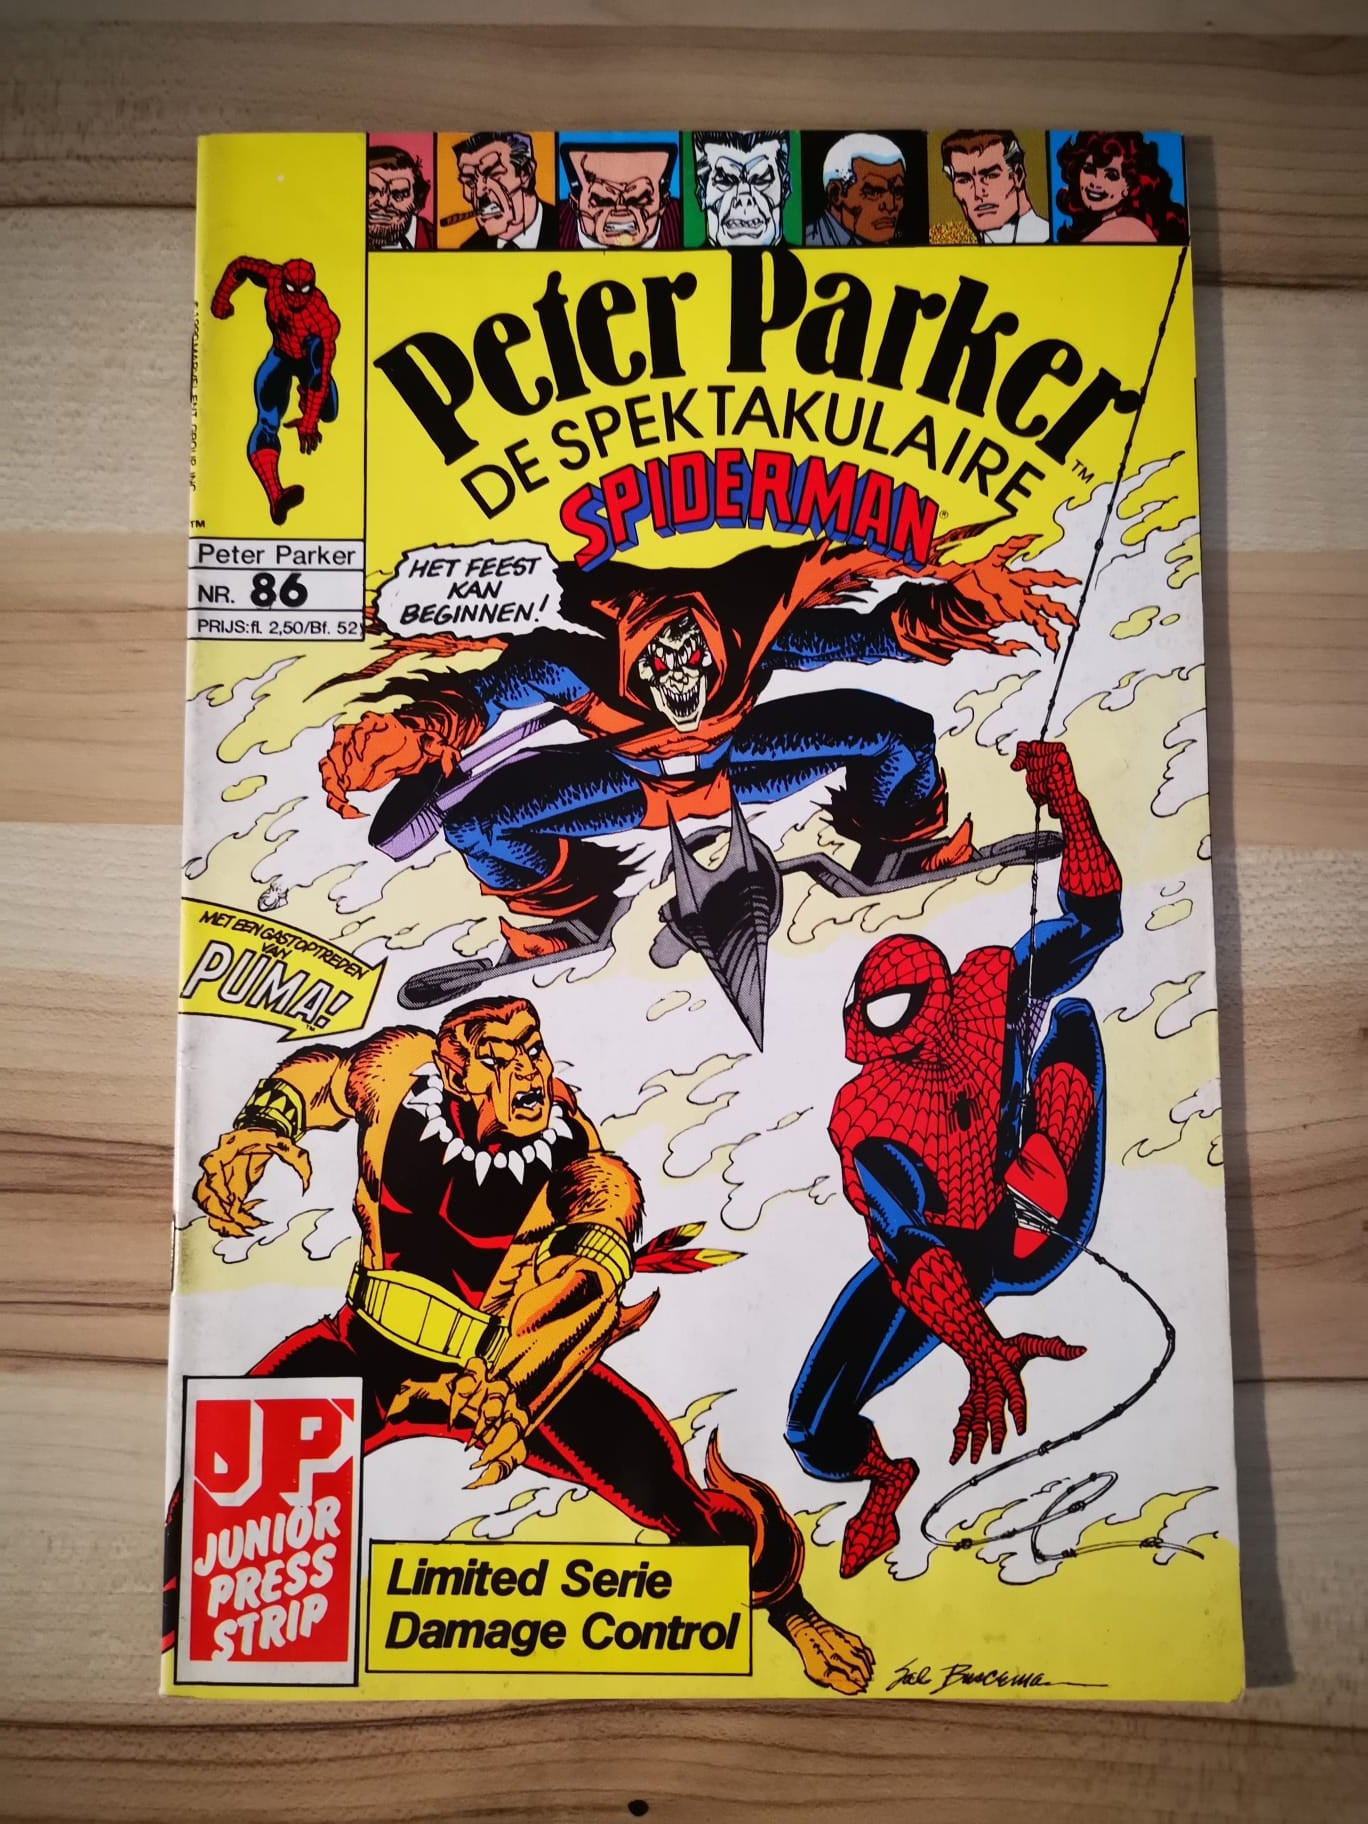 Peter Parker De spektakulaire spiderman #86